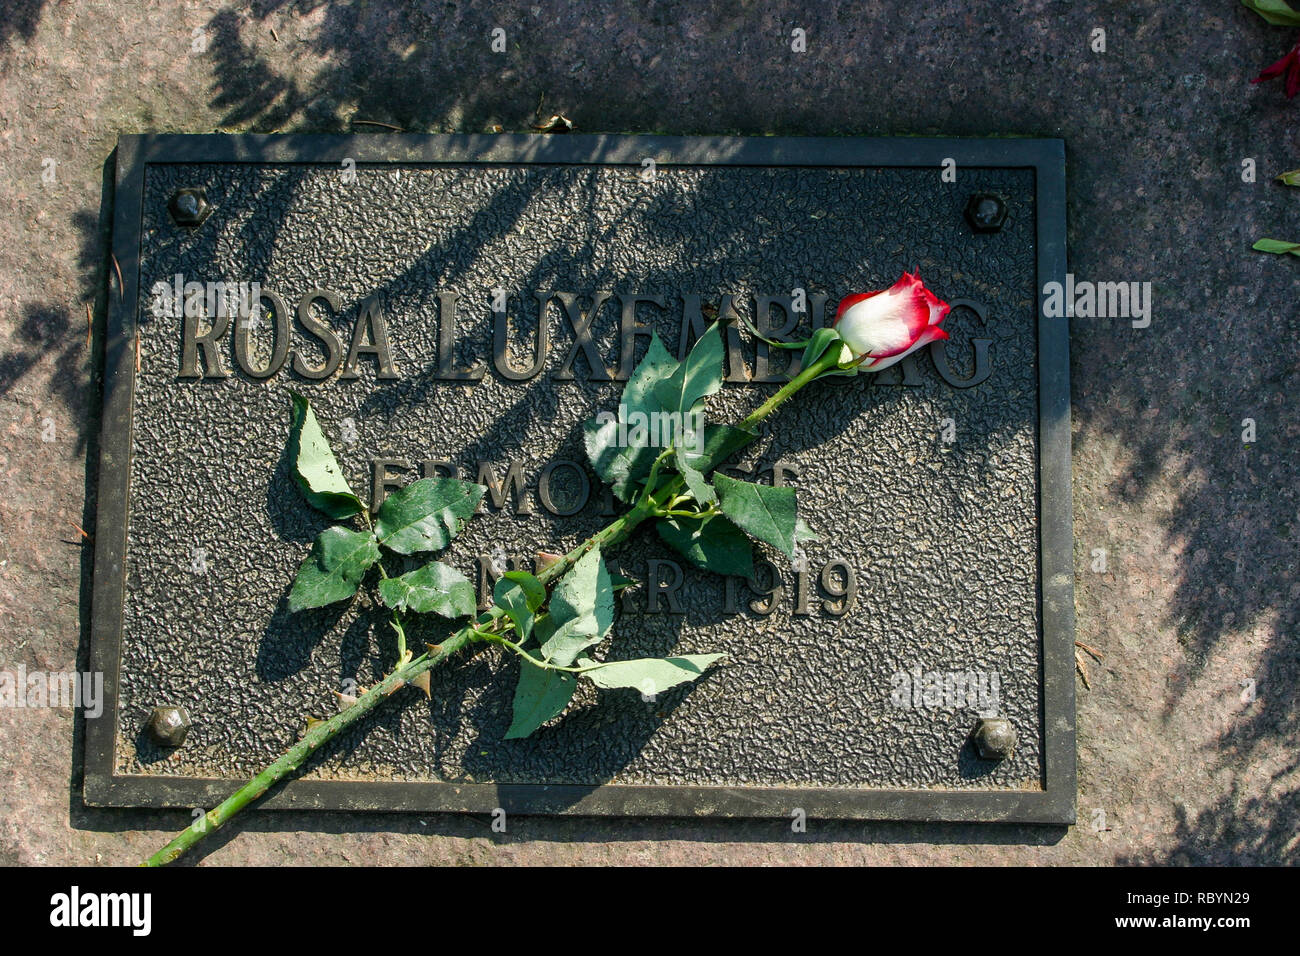 Rosa Luxemburg's grave at Friedrichsfelde cemetery, Berlin, Germany Stock Photo